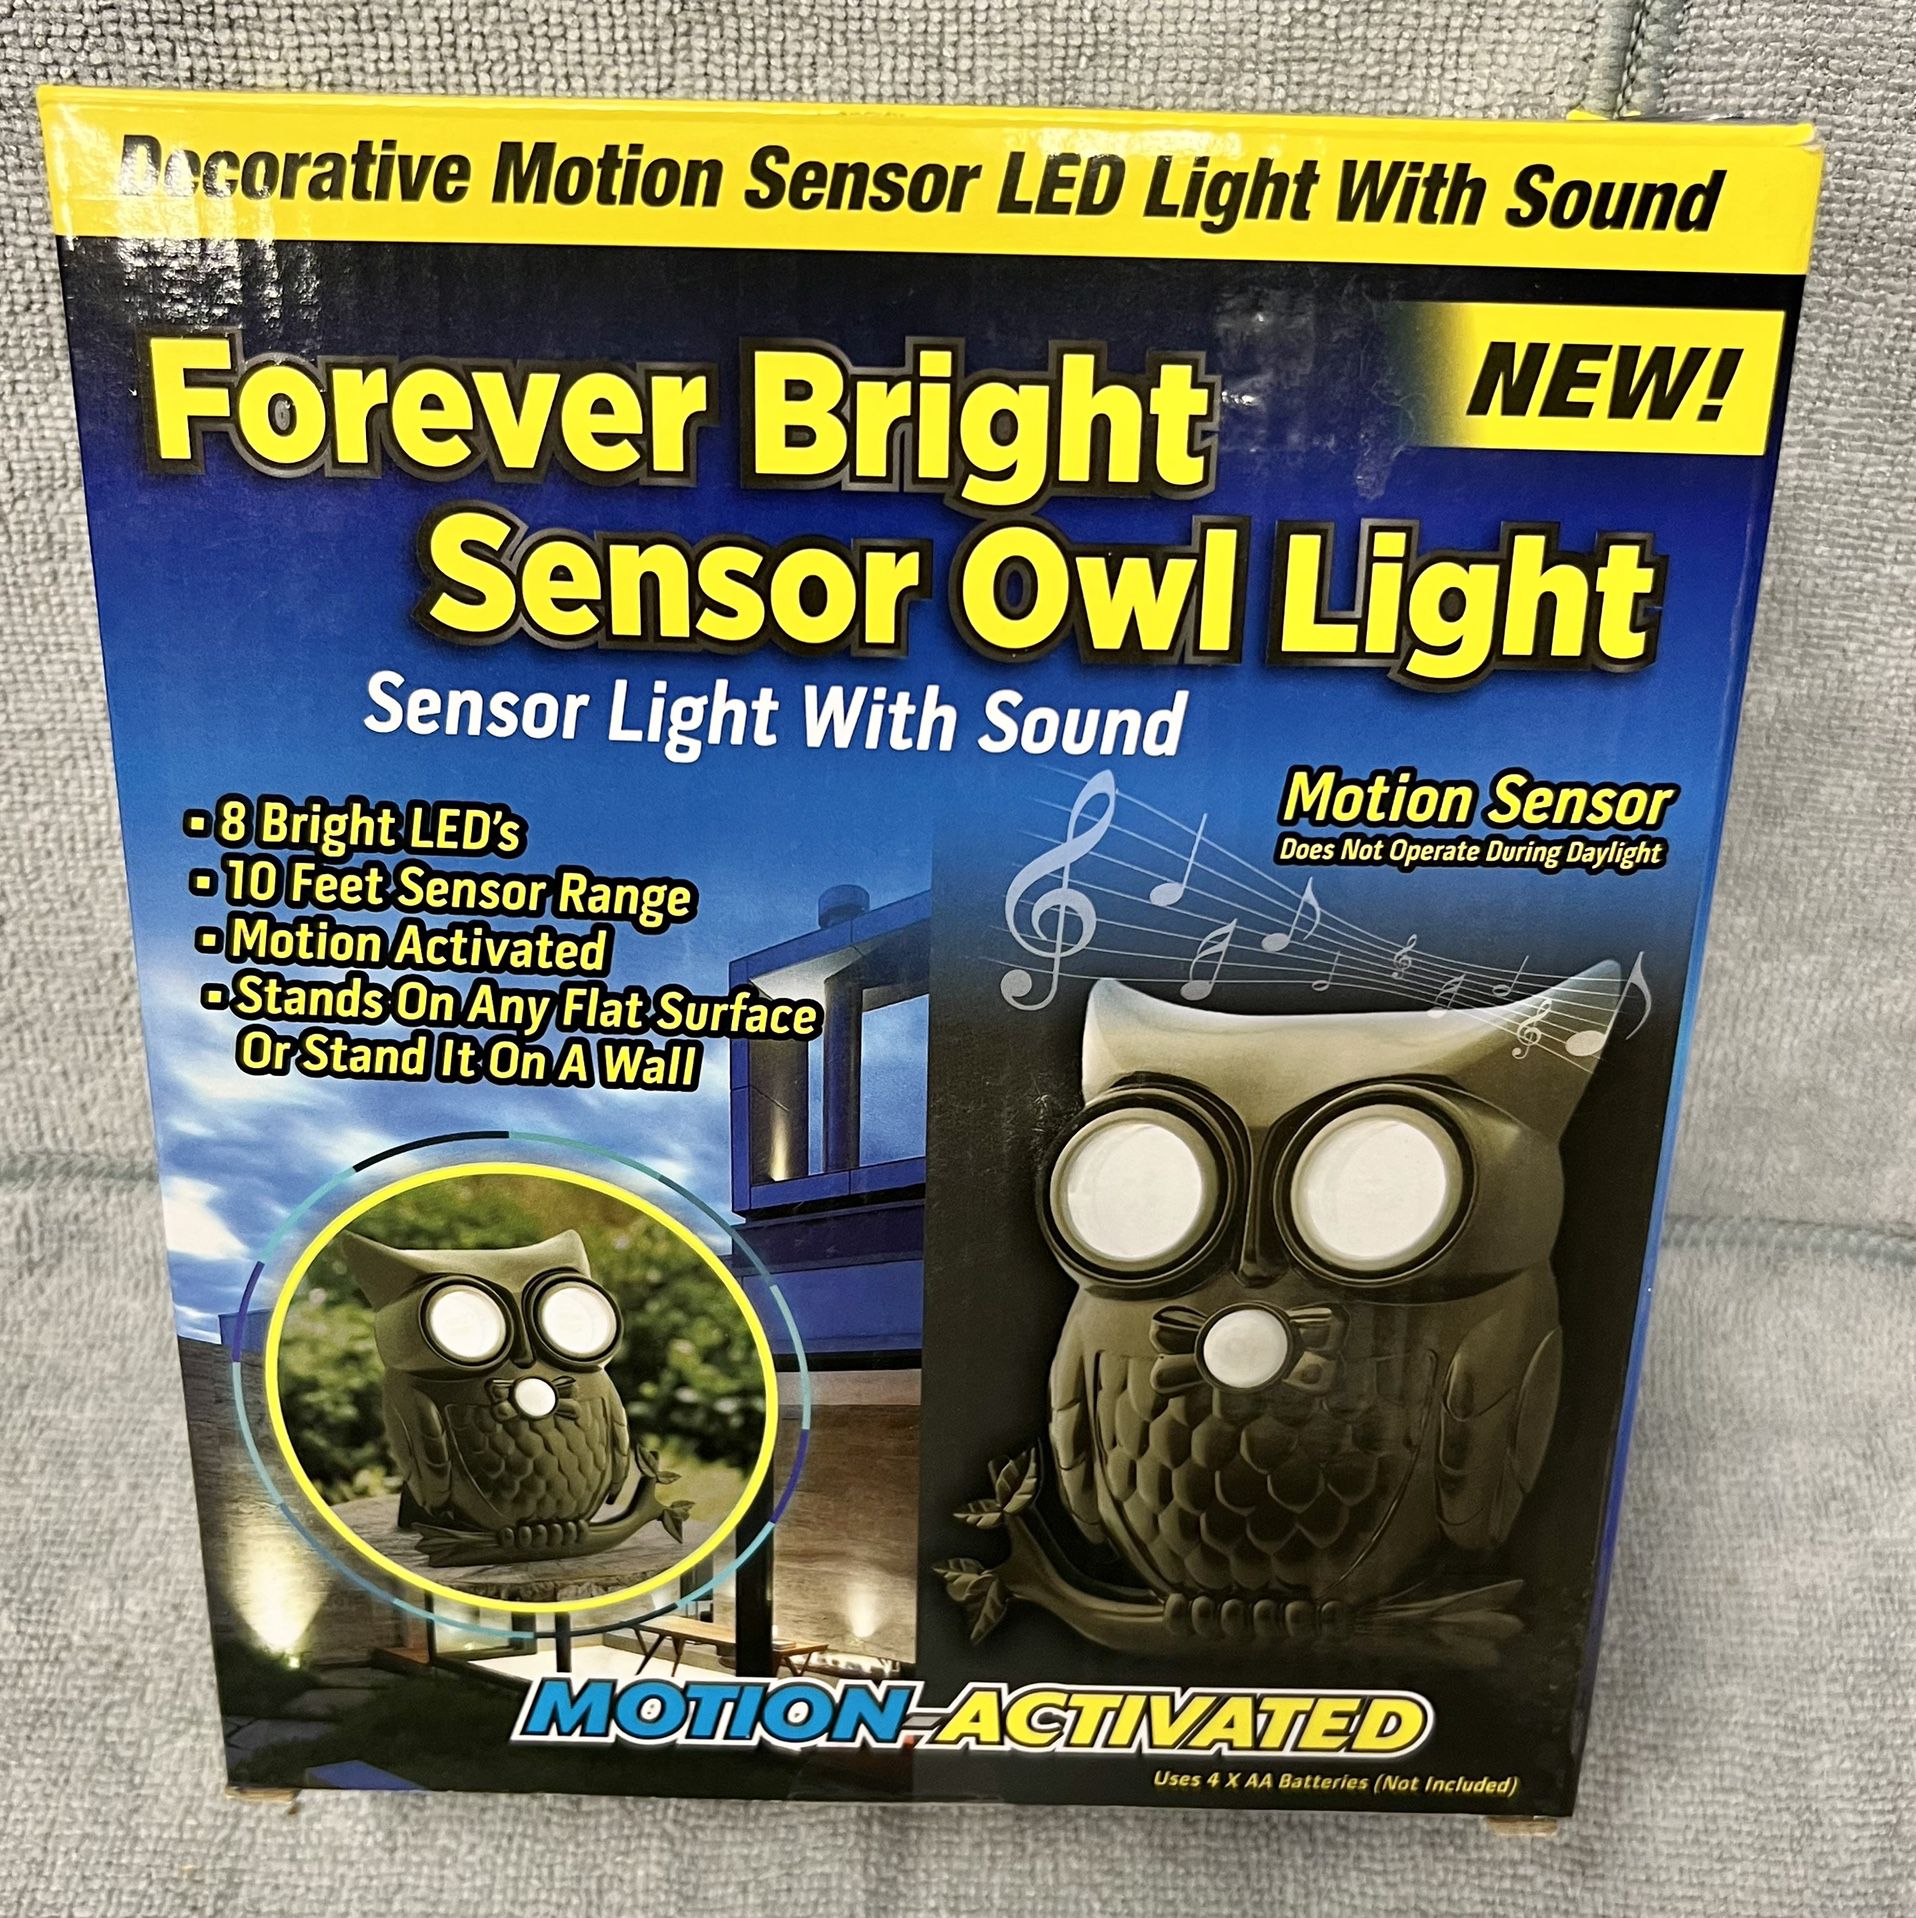 Forever Bright Decorative LED Motion Sensor Hooting Owl Light, Black